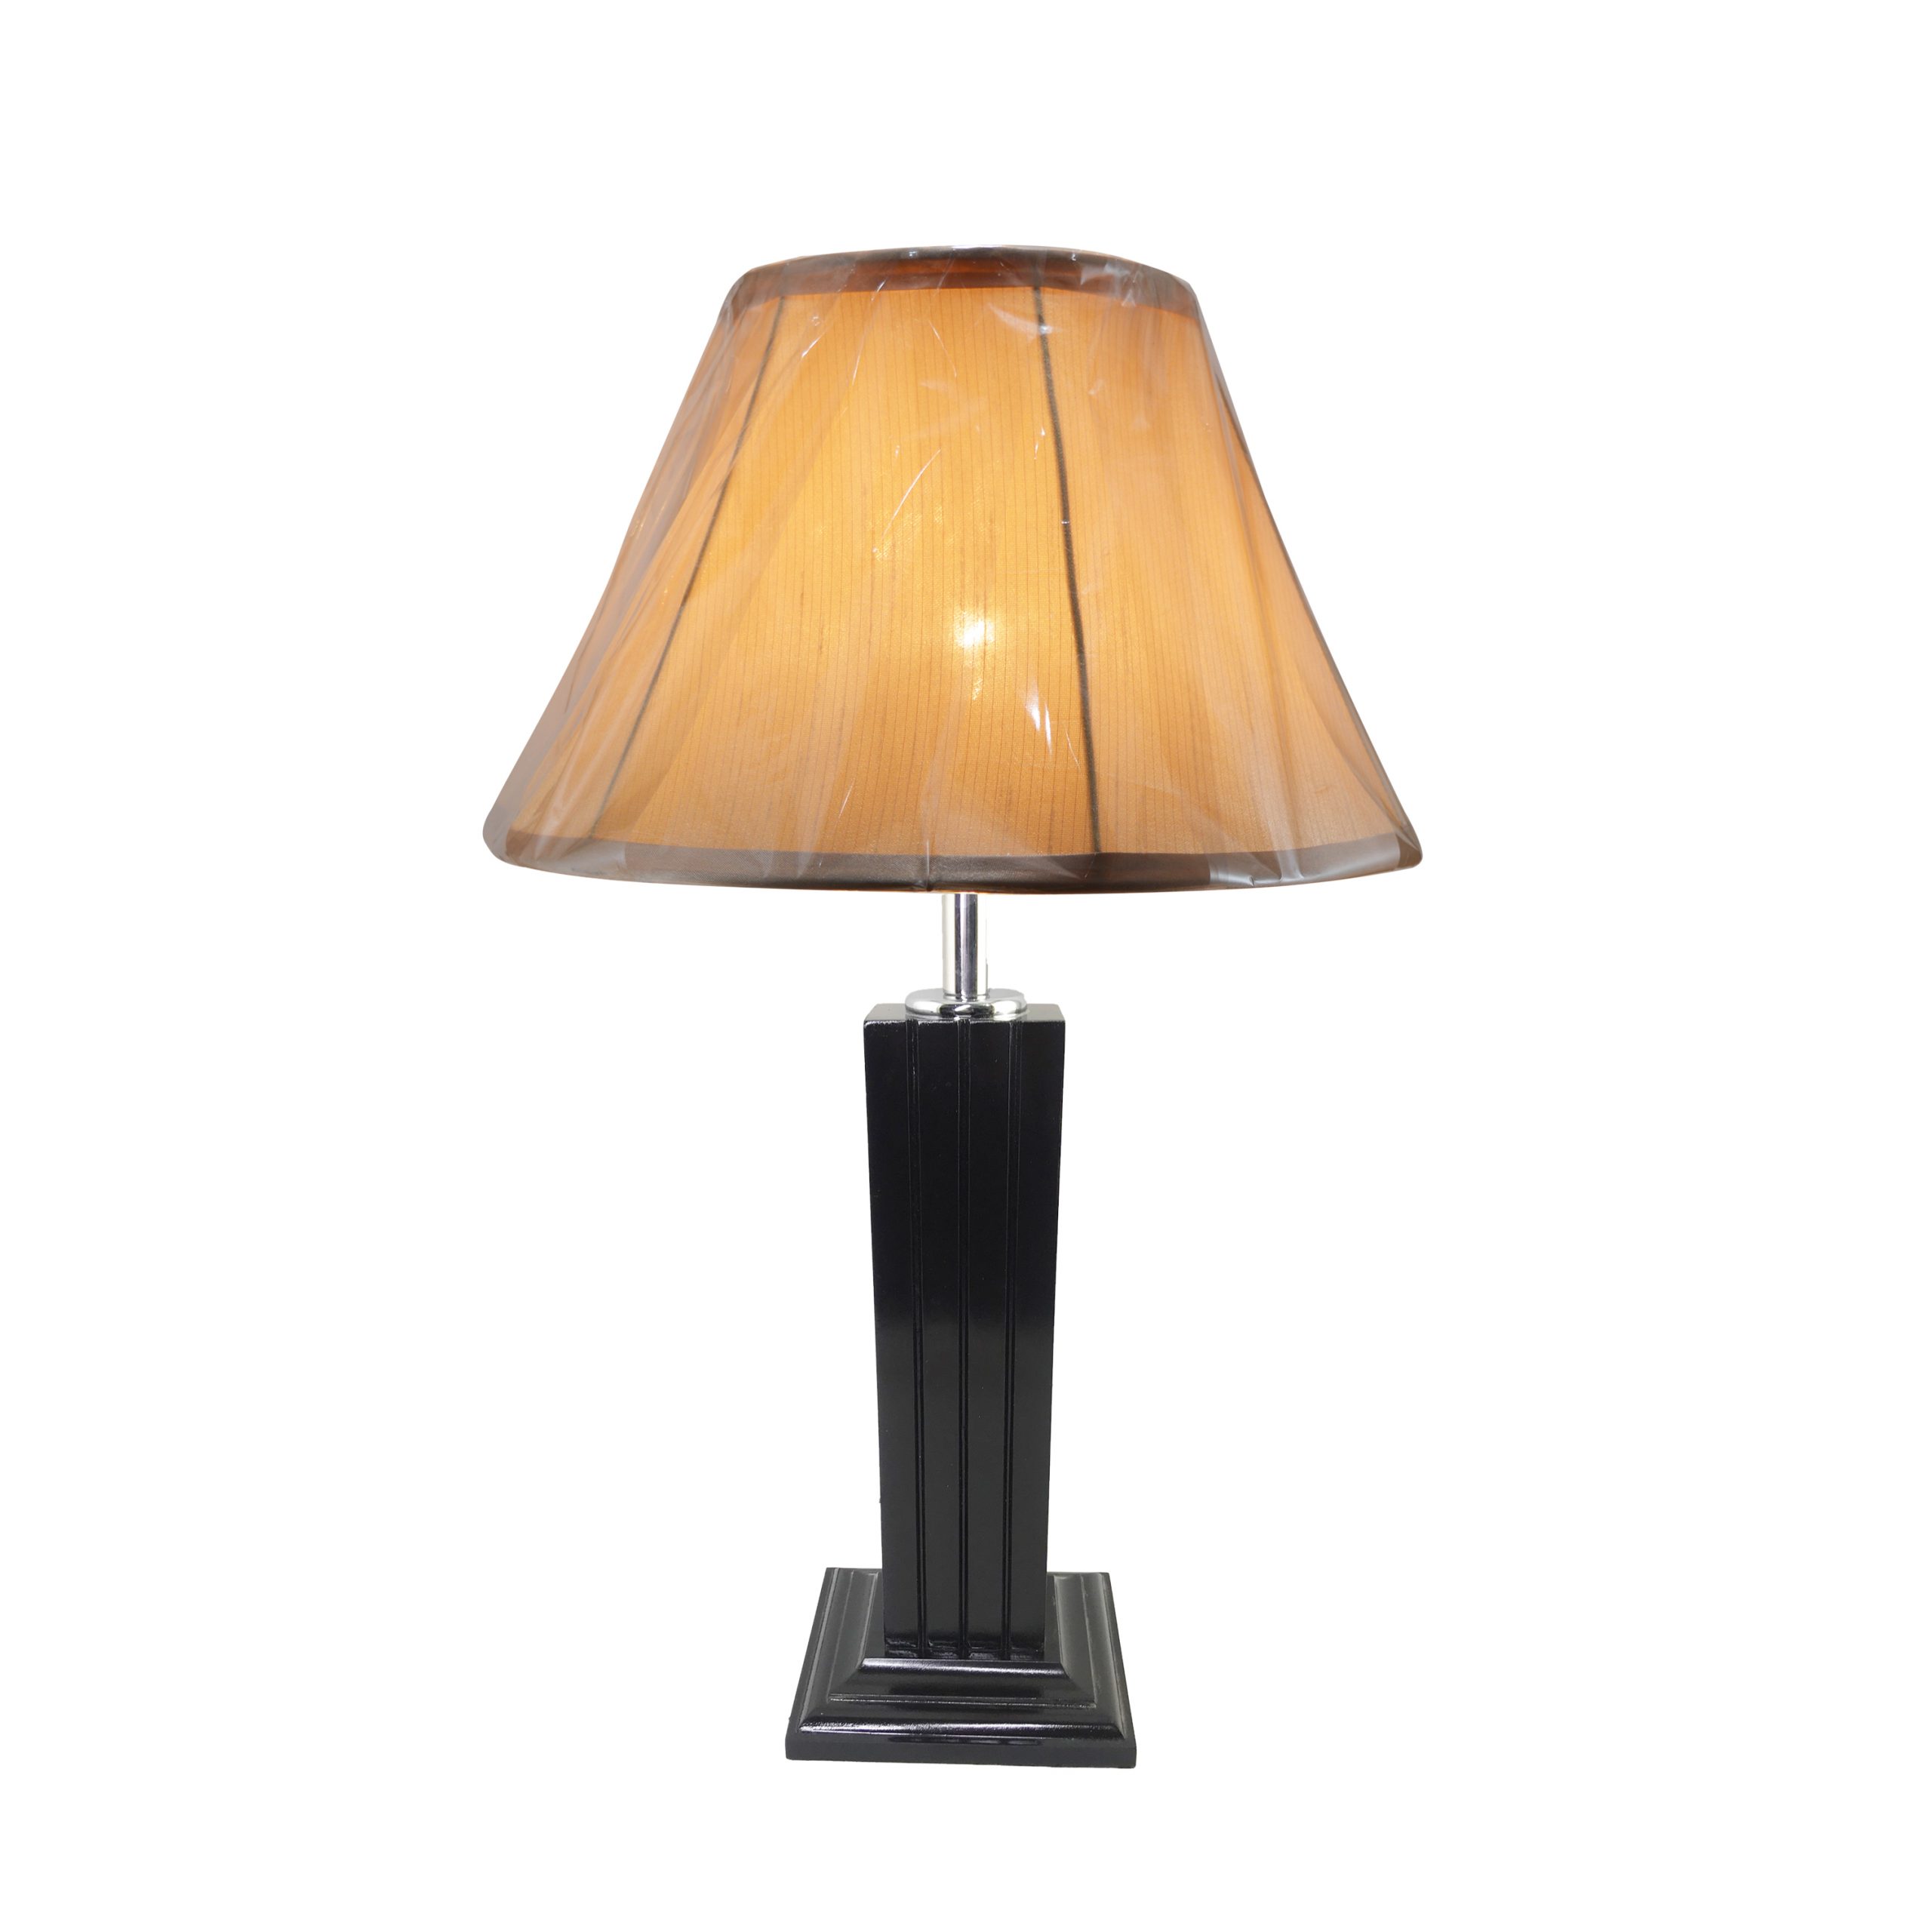 Lamp-6-3-scaled-1.jpg